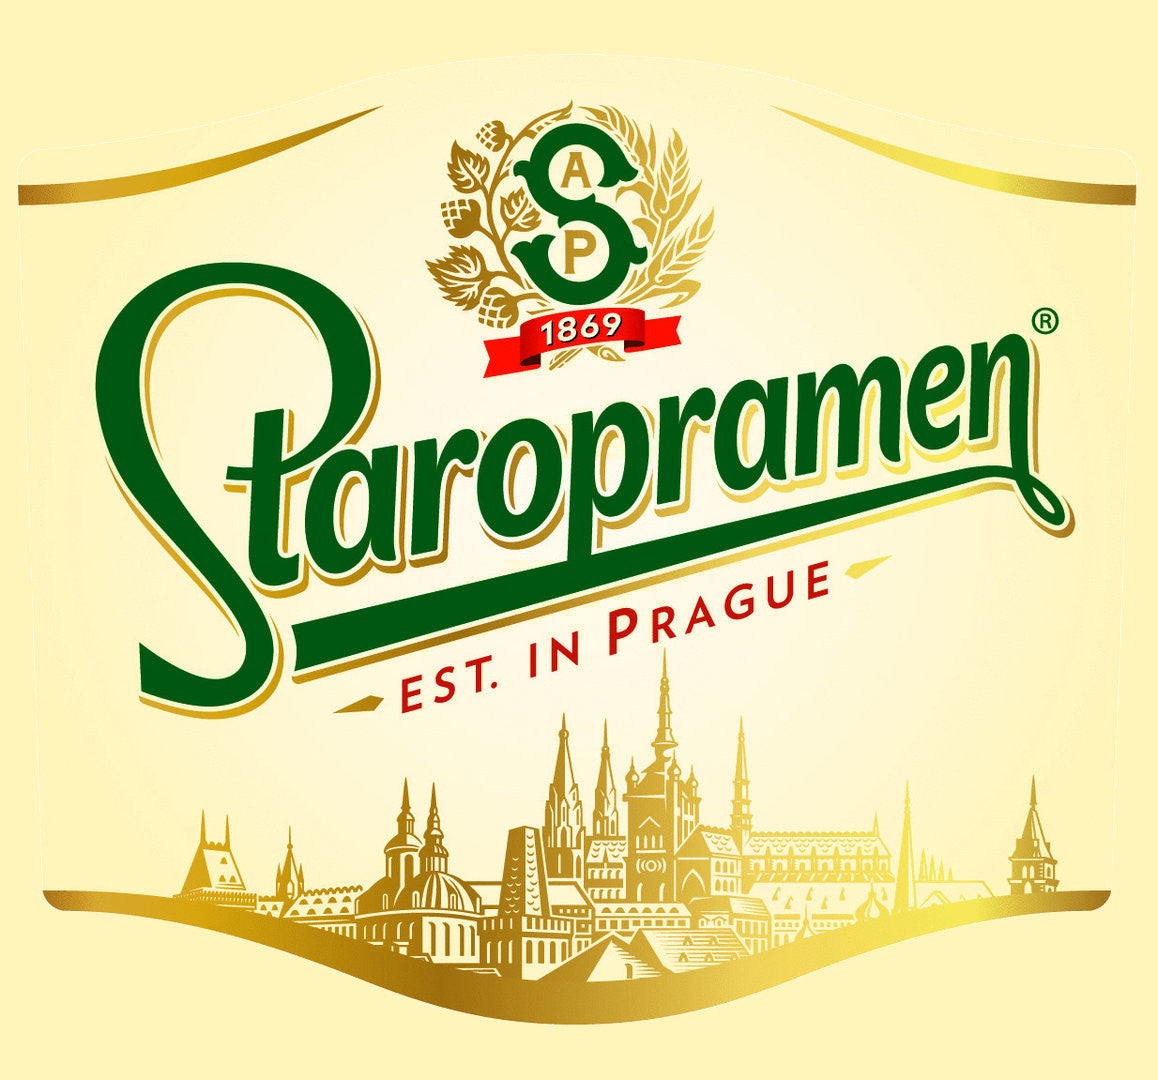 Staropramen Premium Beer 24 x 0,33L (Glas) MEHRWEG Kiste zzgl. 3,42 € Pfand